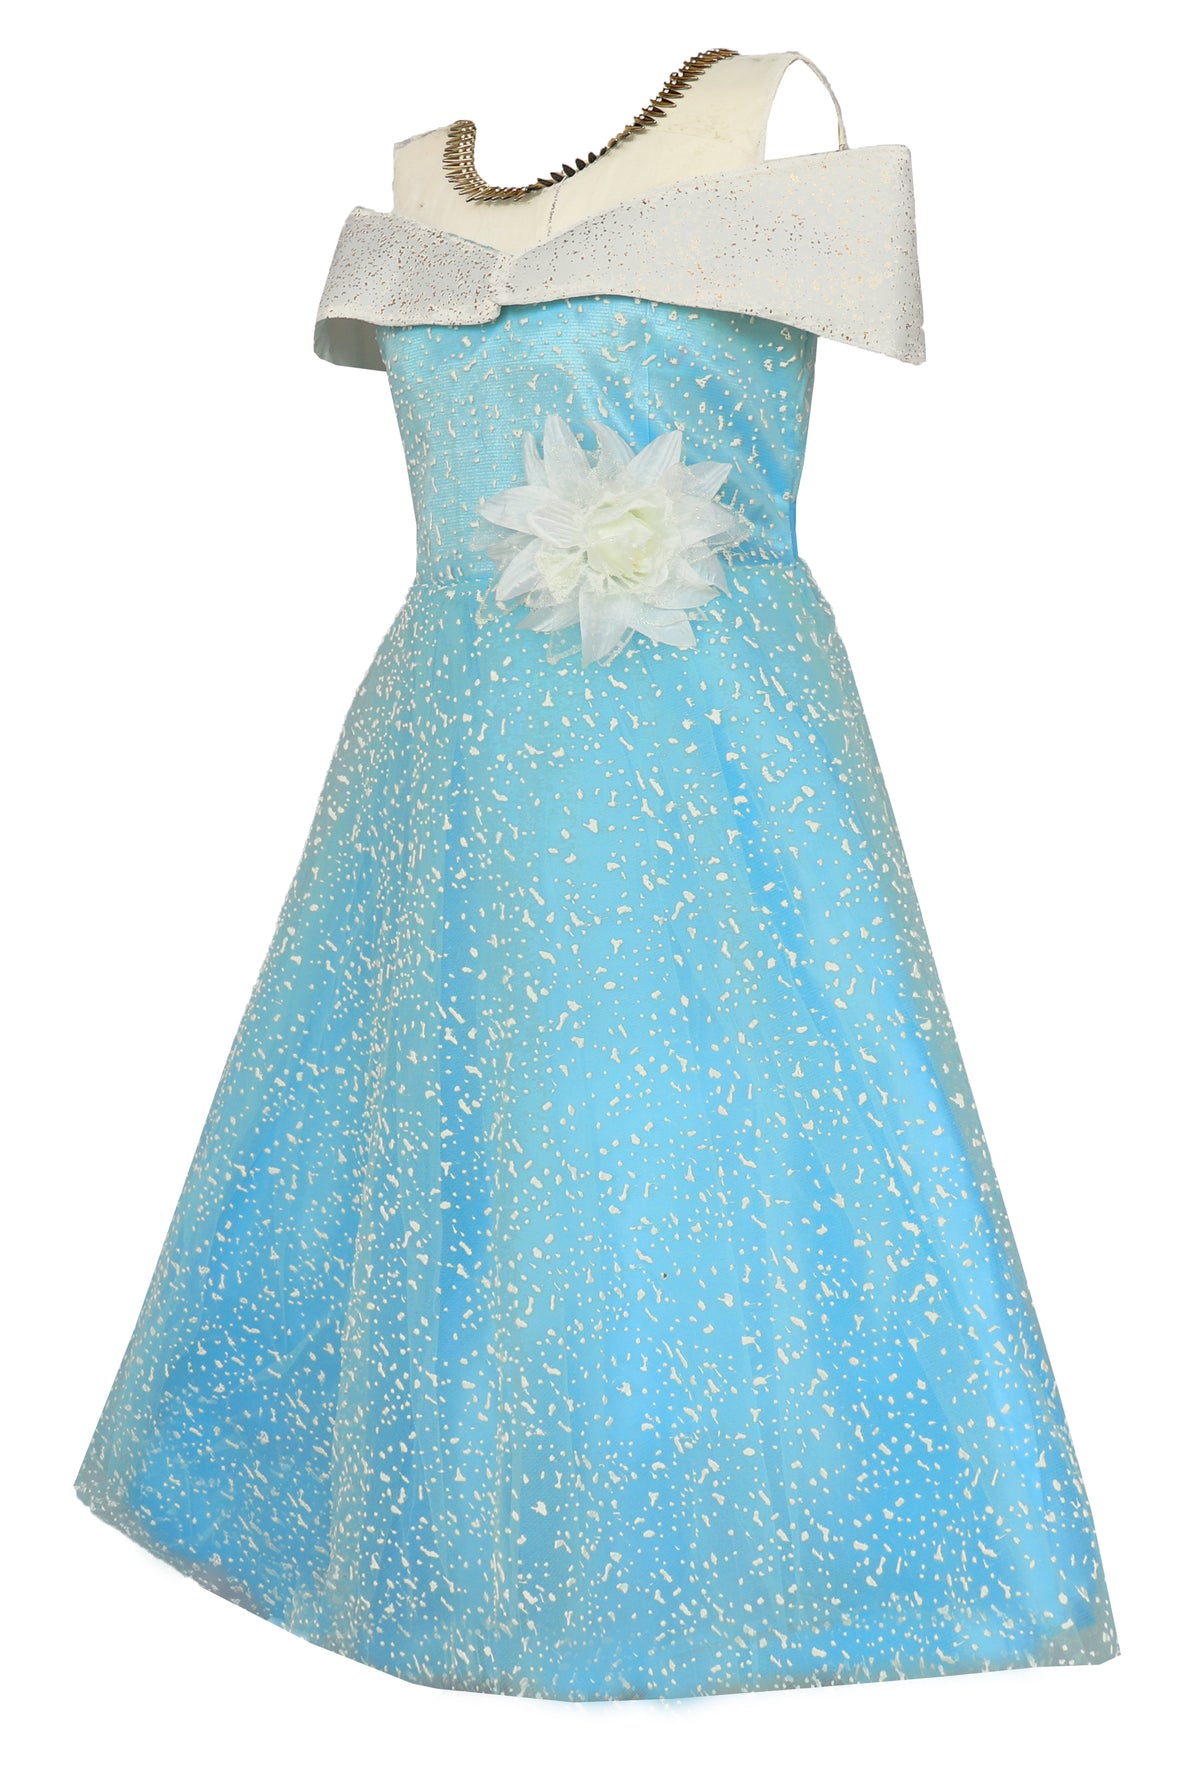 My Lil Princess Sky Blue Polka Dress Side View